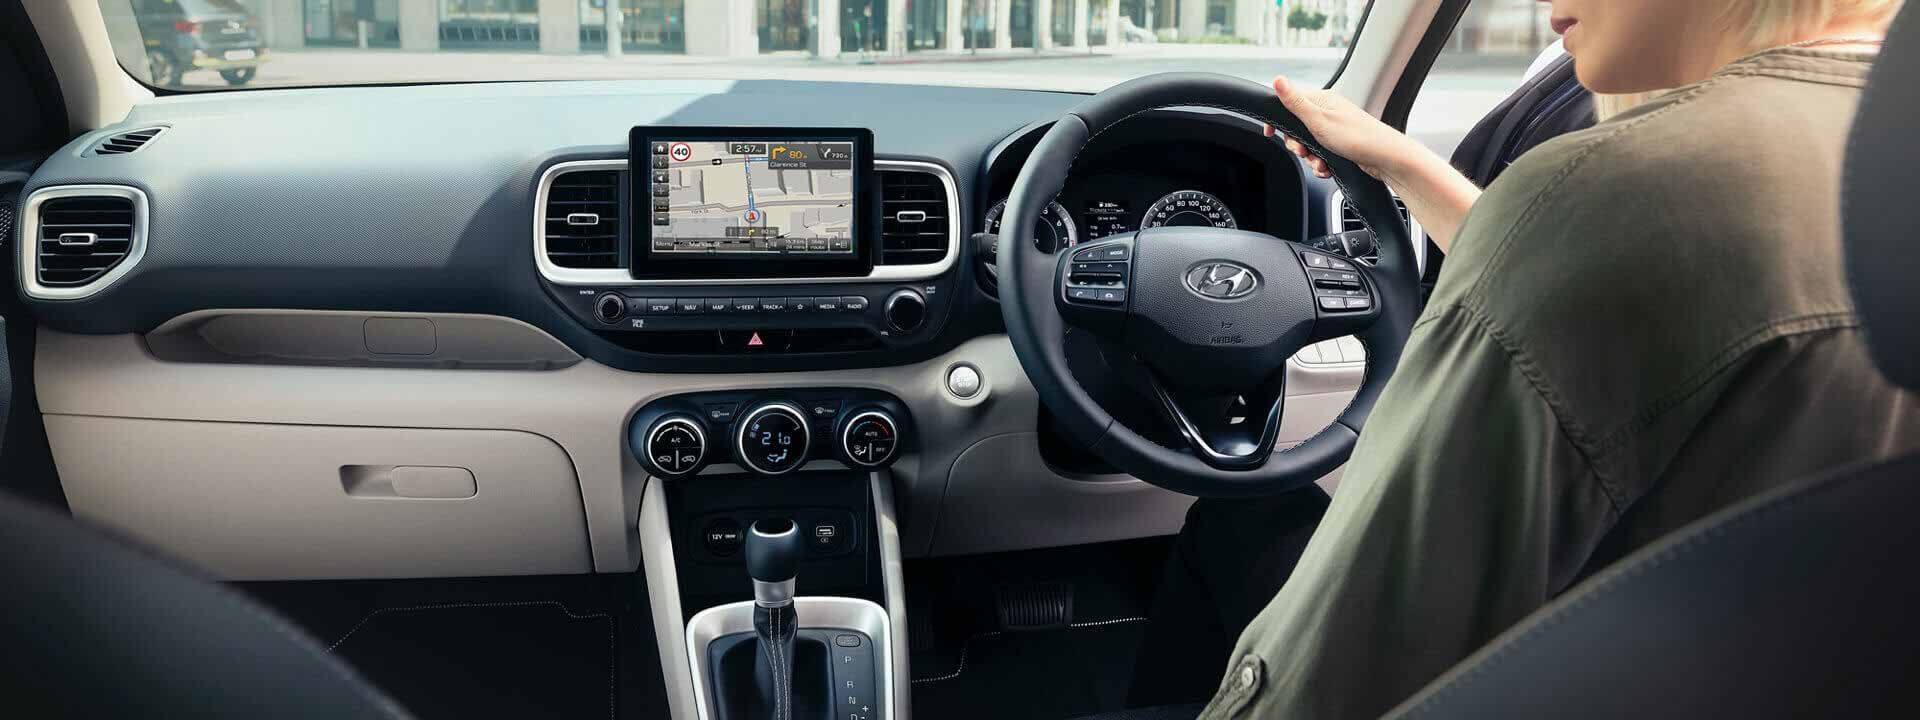 Hyundai Venue - Features